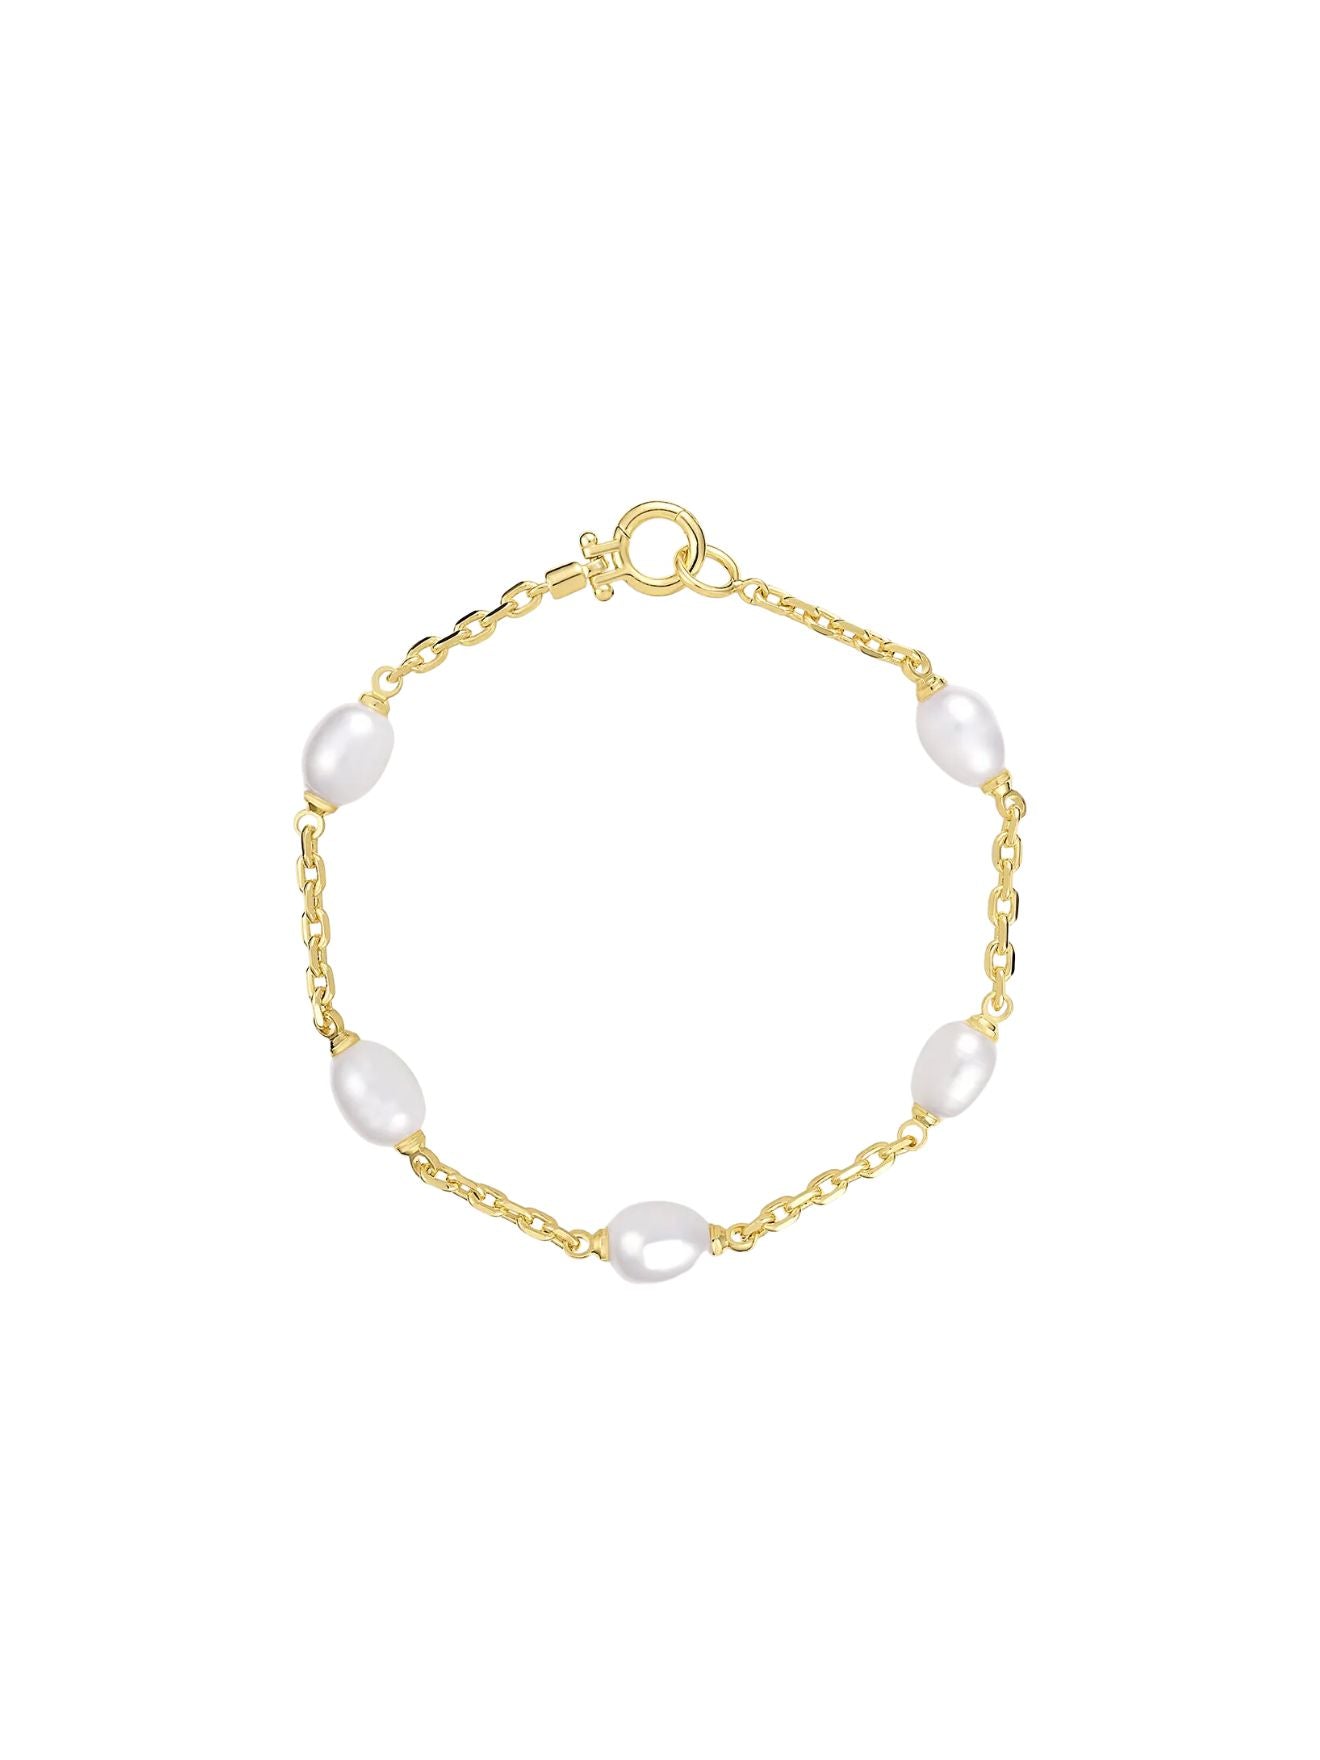 All Jewelry - Leona